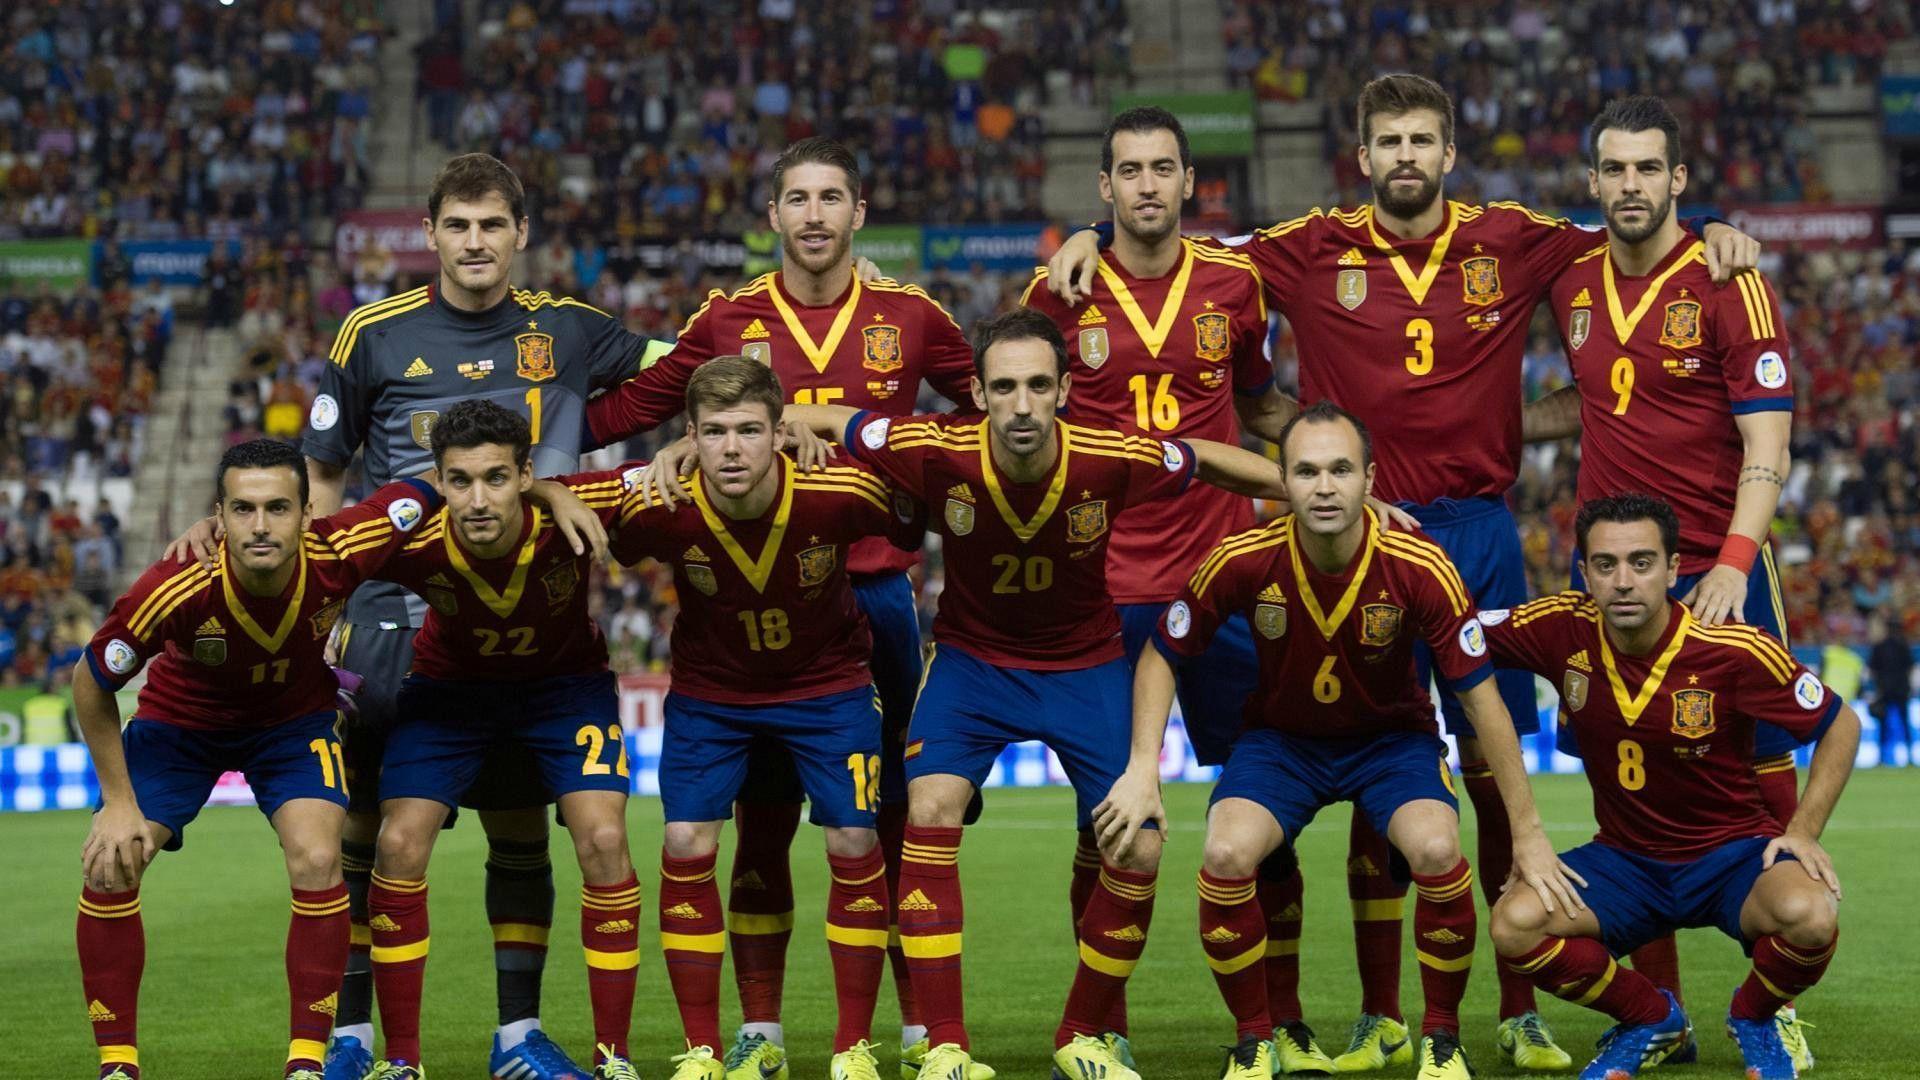 Spain Football Team Wallpaper. Spain Football Team Image. New